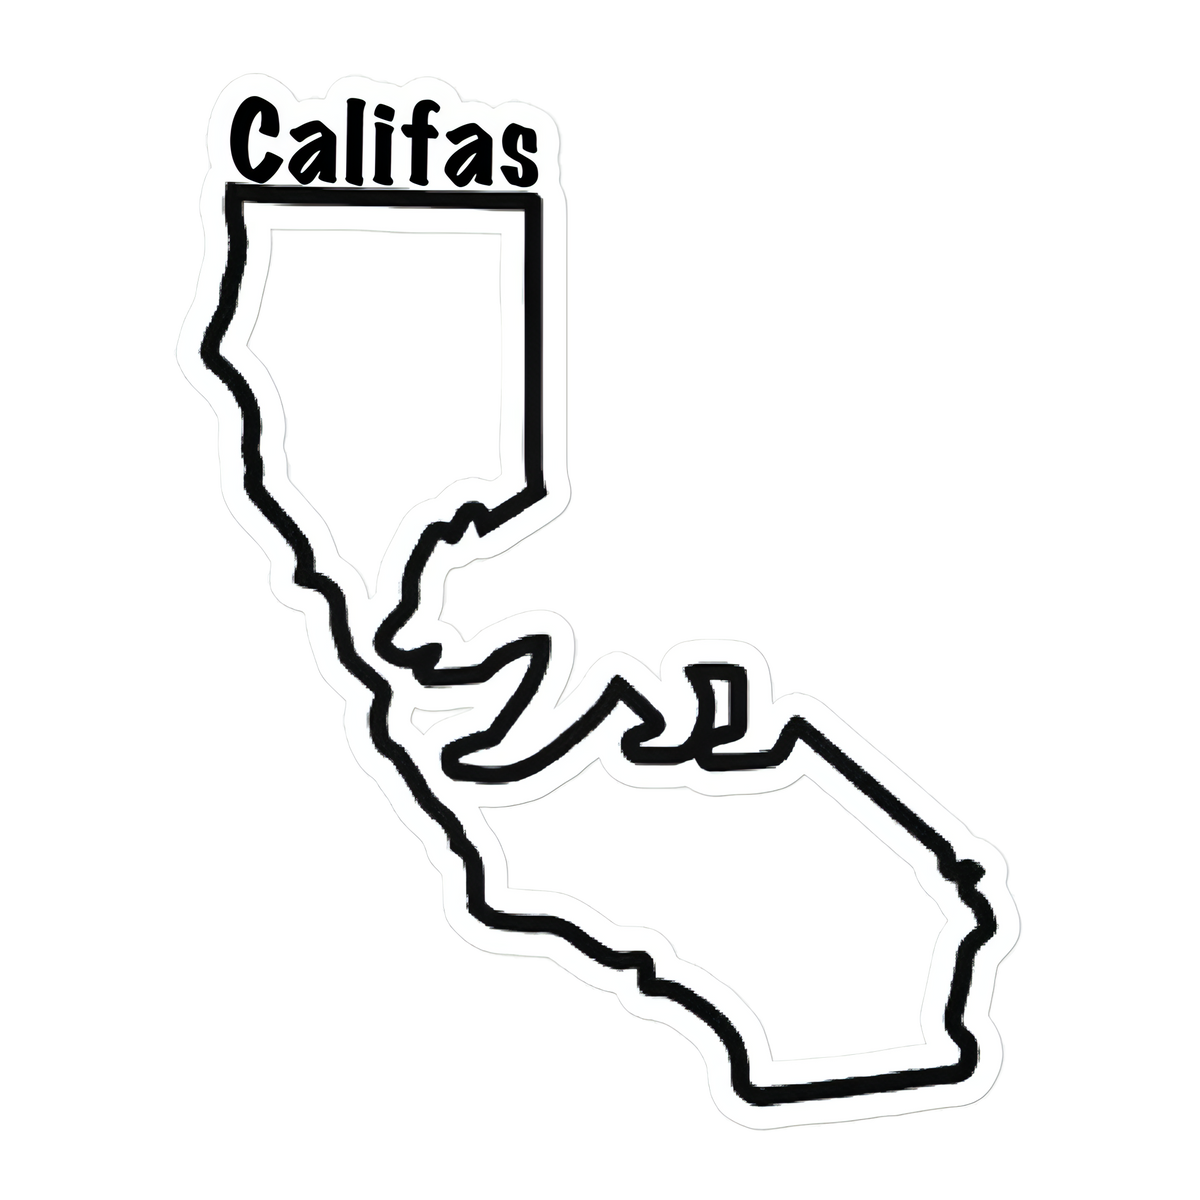 Califas (California) sticker